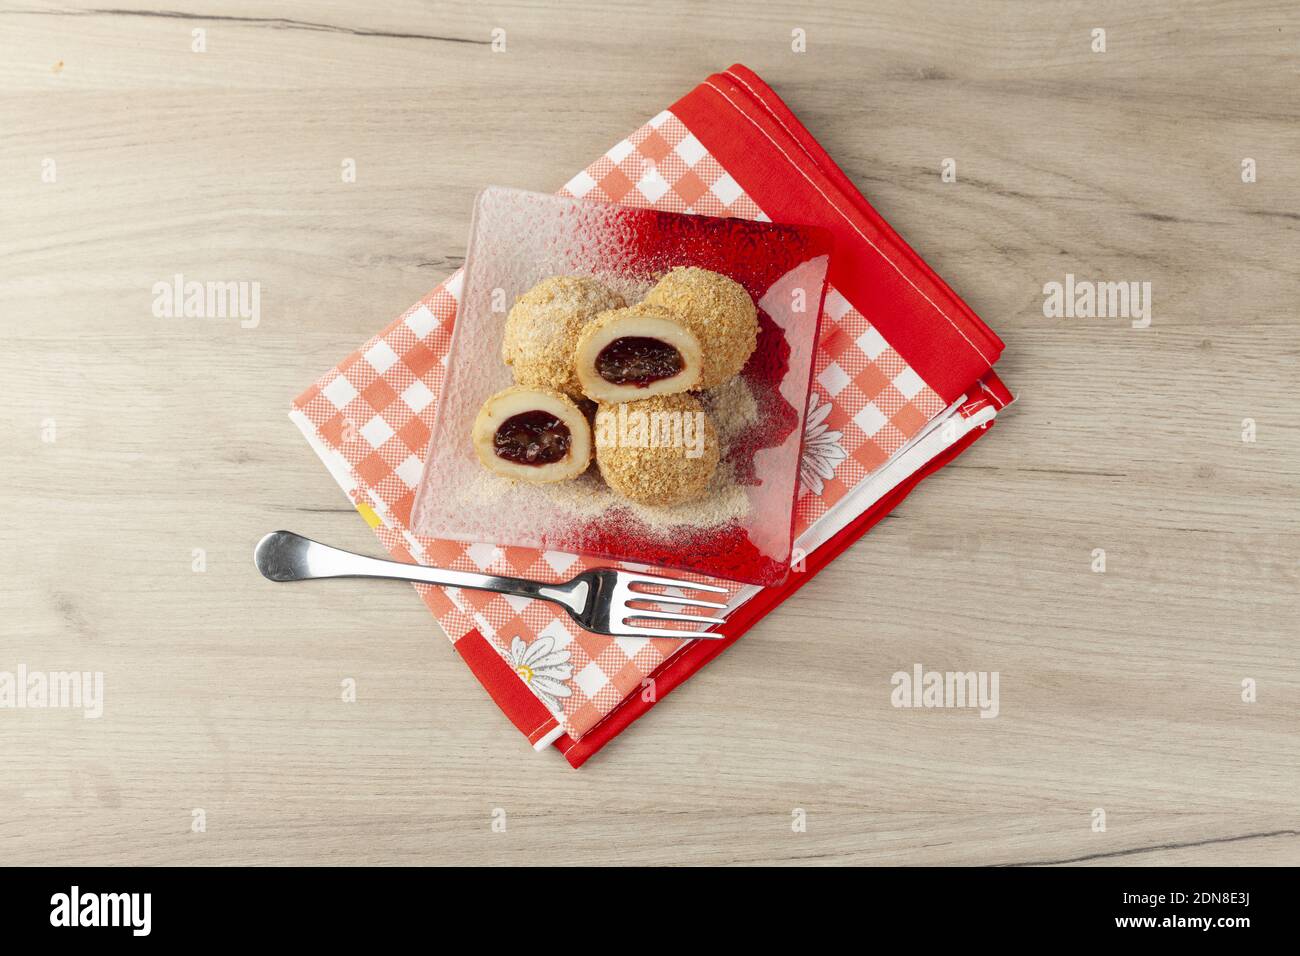 dumplings stuffed with plums, close up Stock Photo